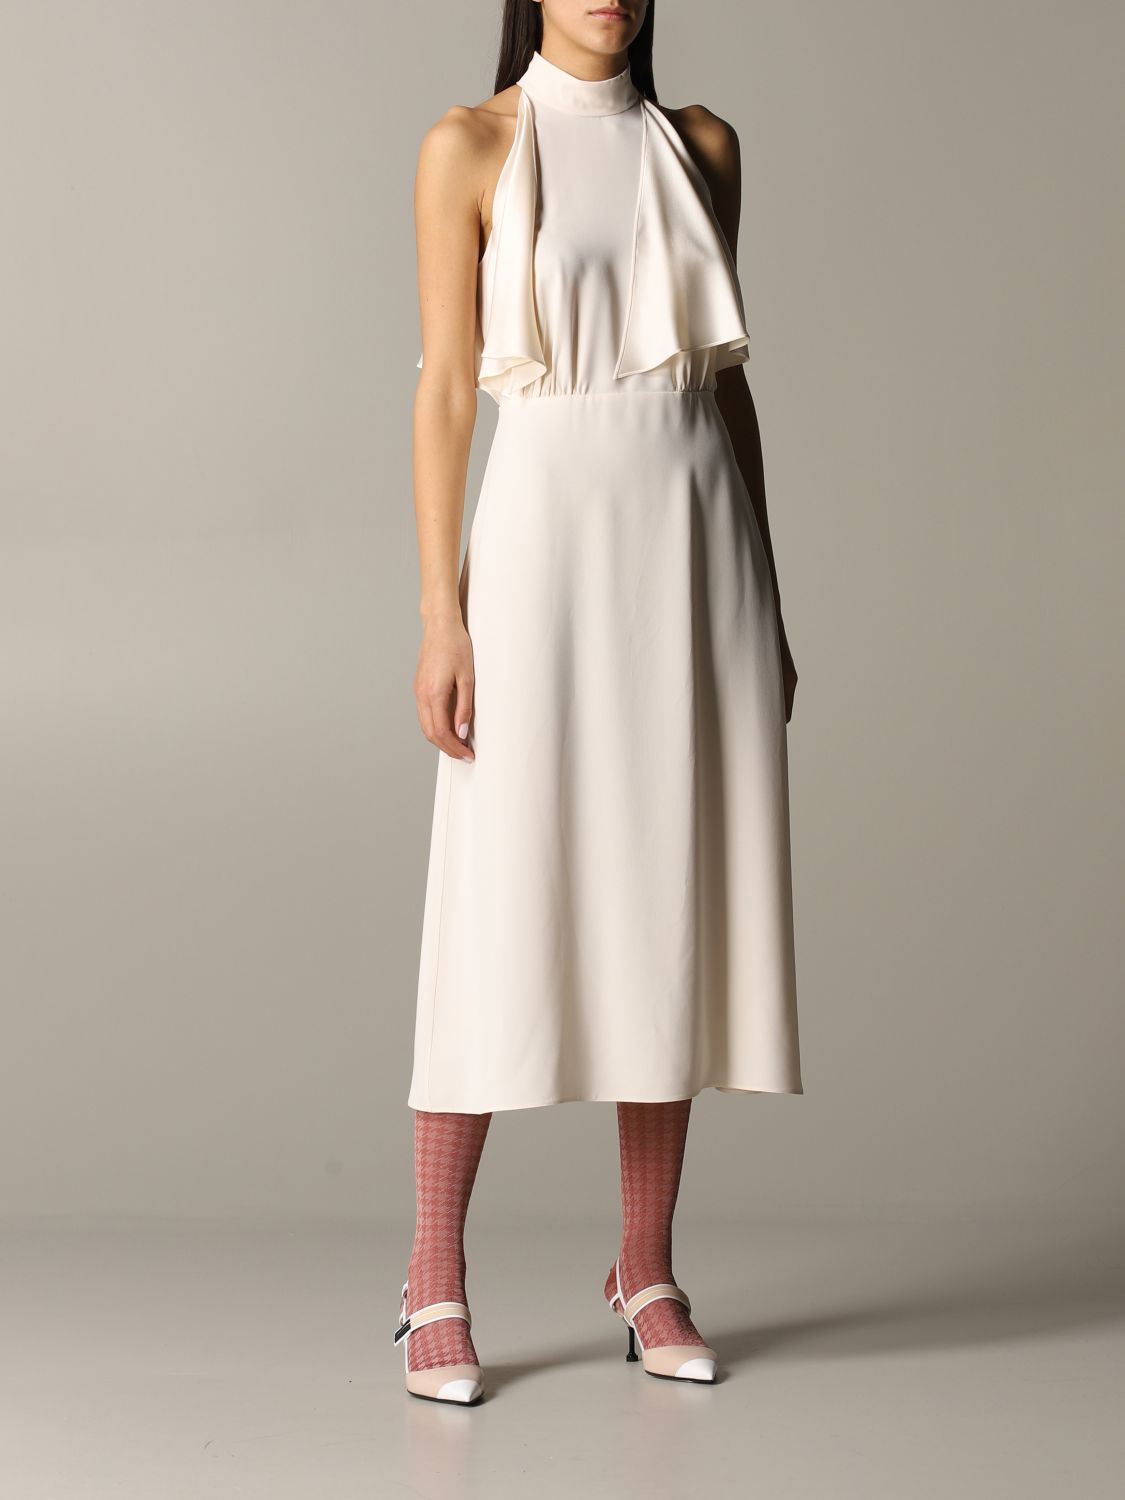 PRADA: silk dress with ruffles | Dress 